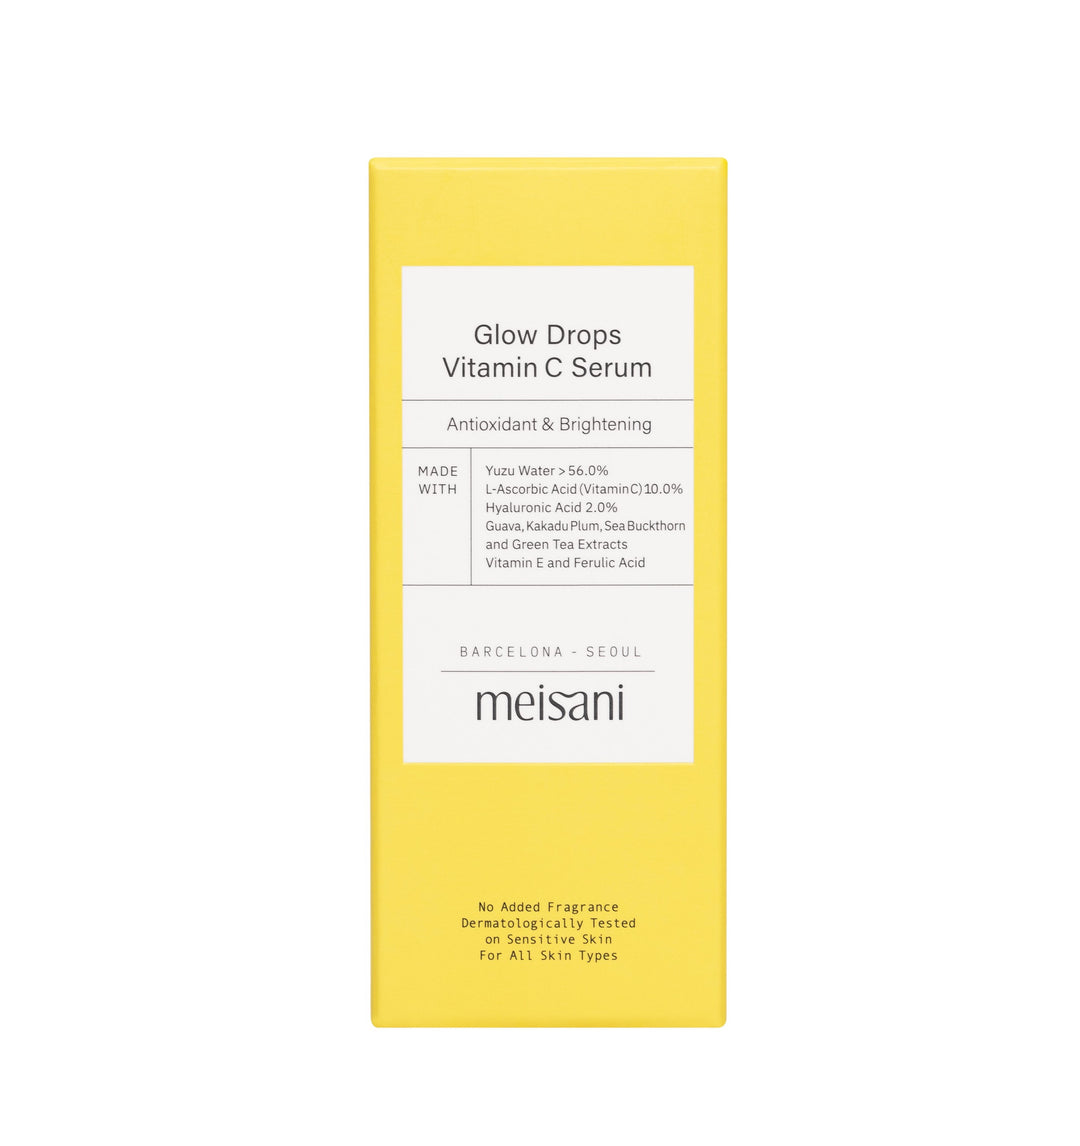 Meisani Glow Drops Vitamin C Serum